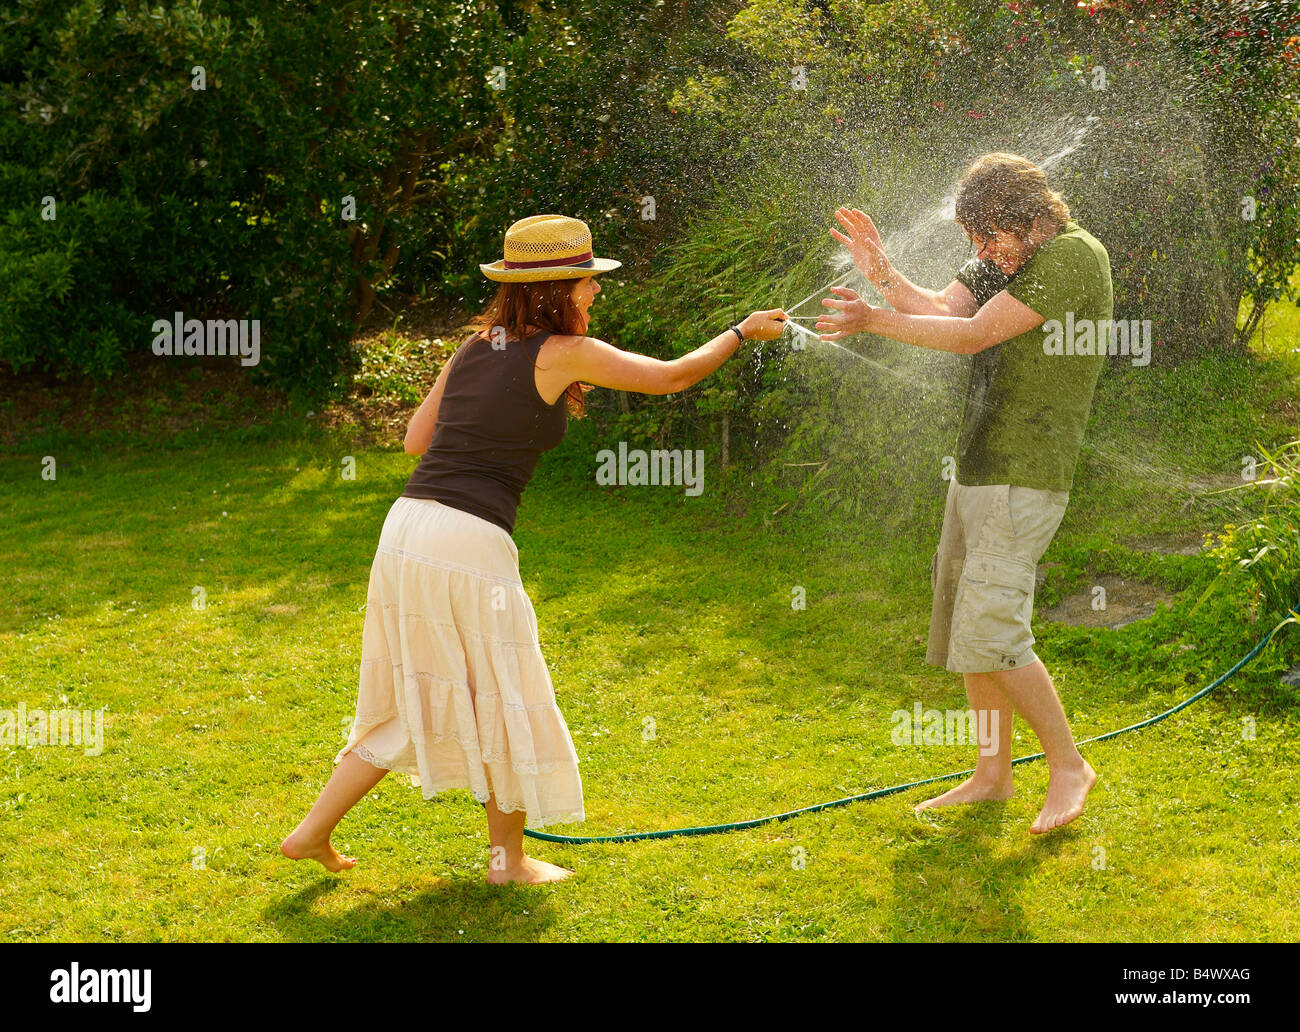 Woman spraying man with garden hose Stock Photo